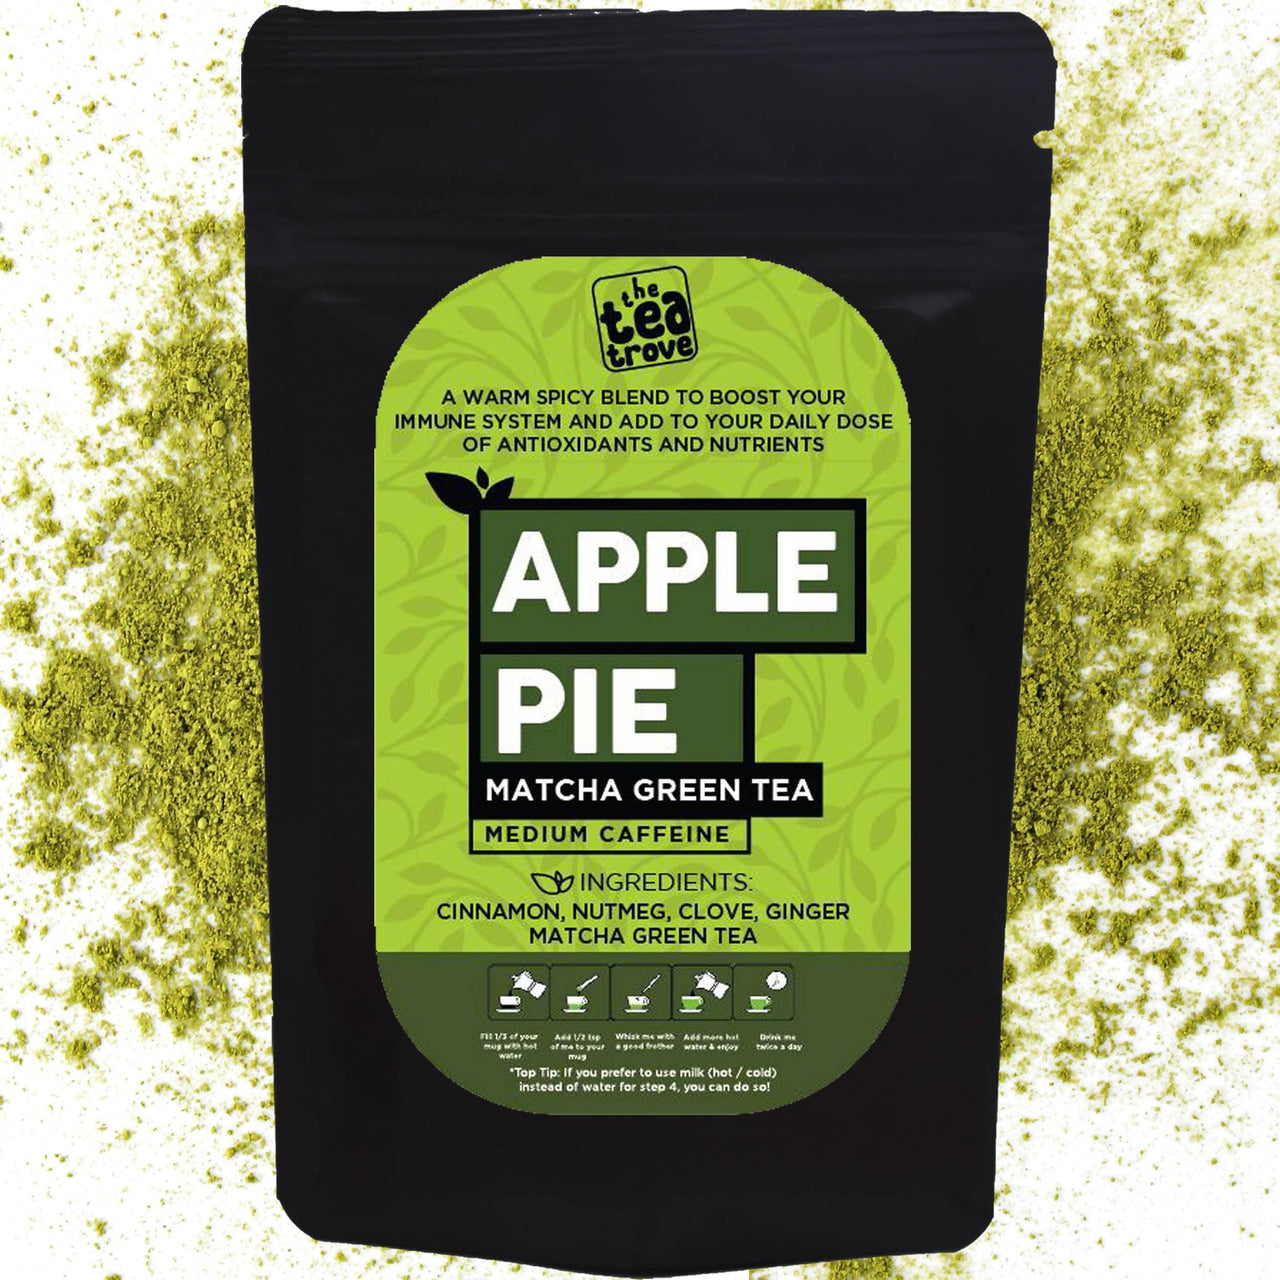 The Trove Tea - Apple Pie Matcha Green Tea